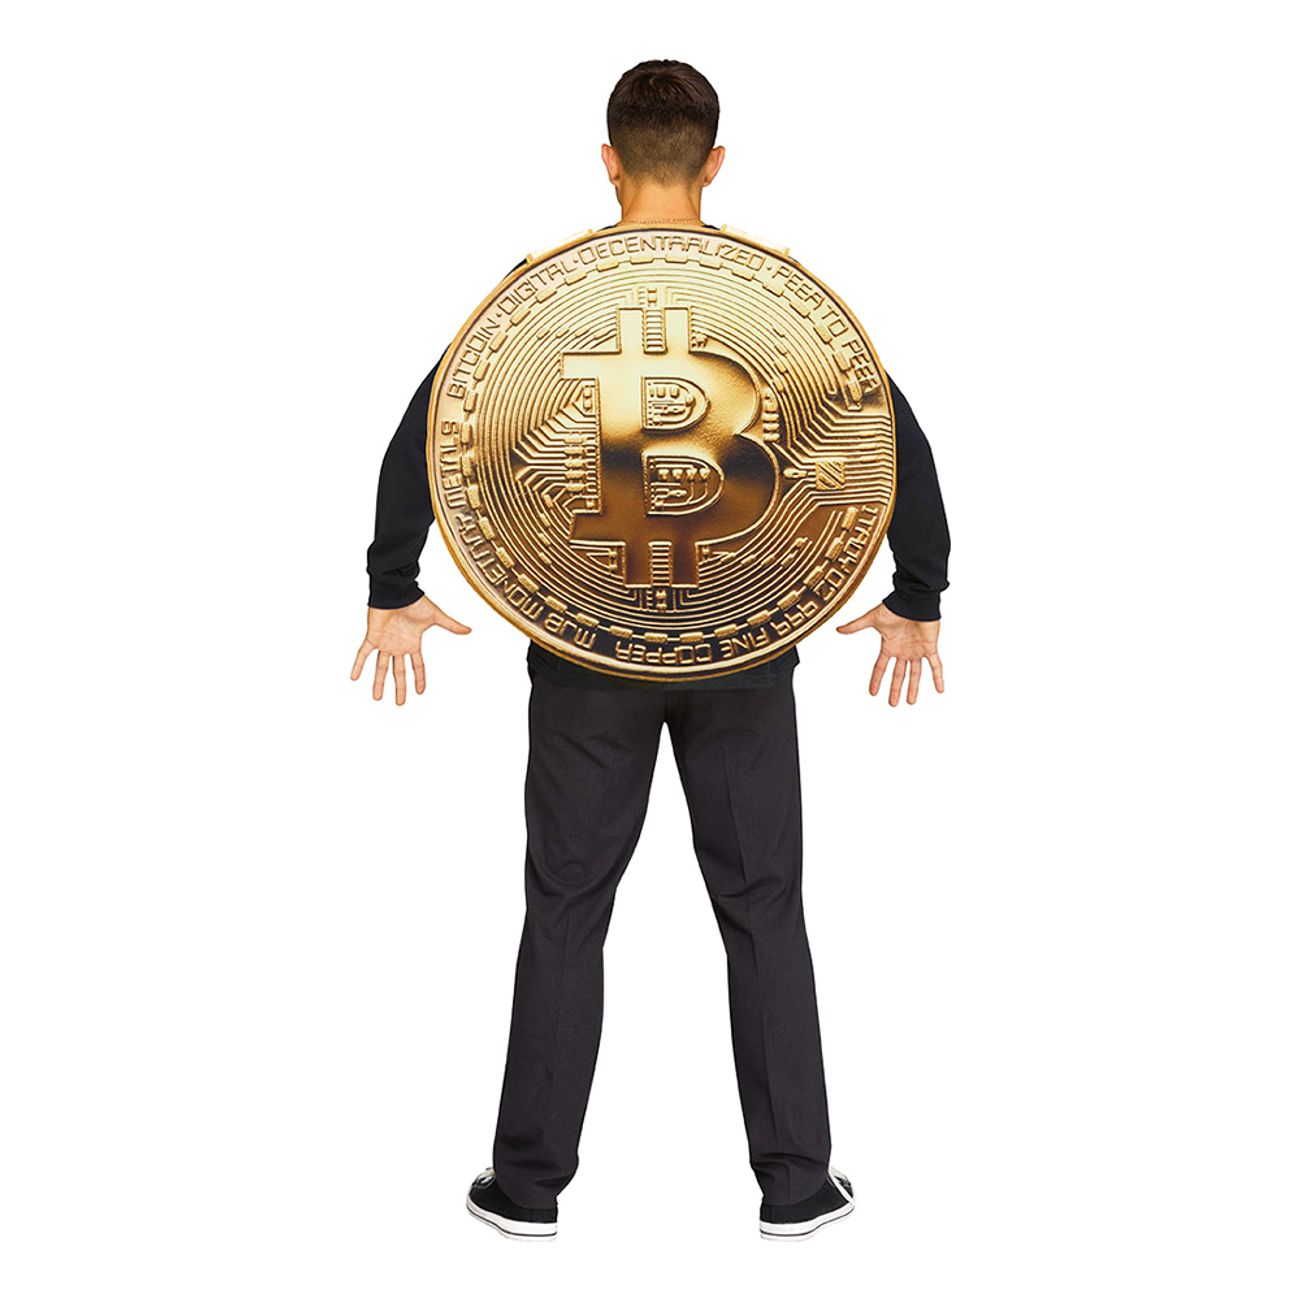 bitcoin-adult-costume-98319-2